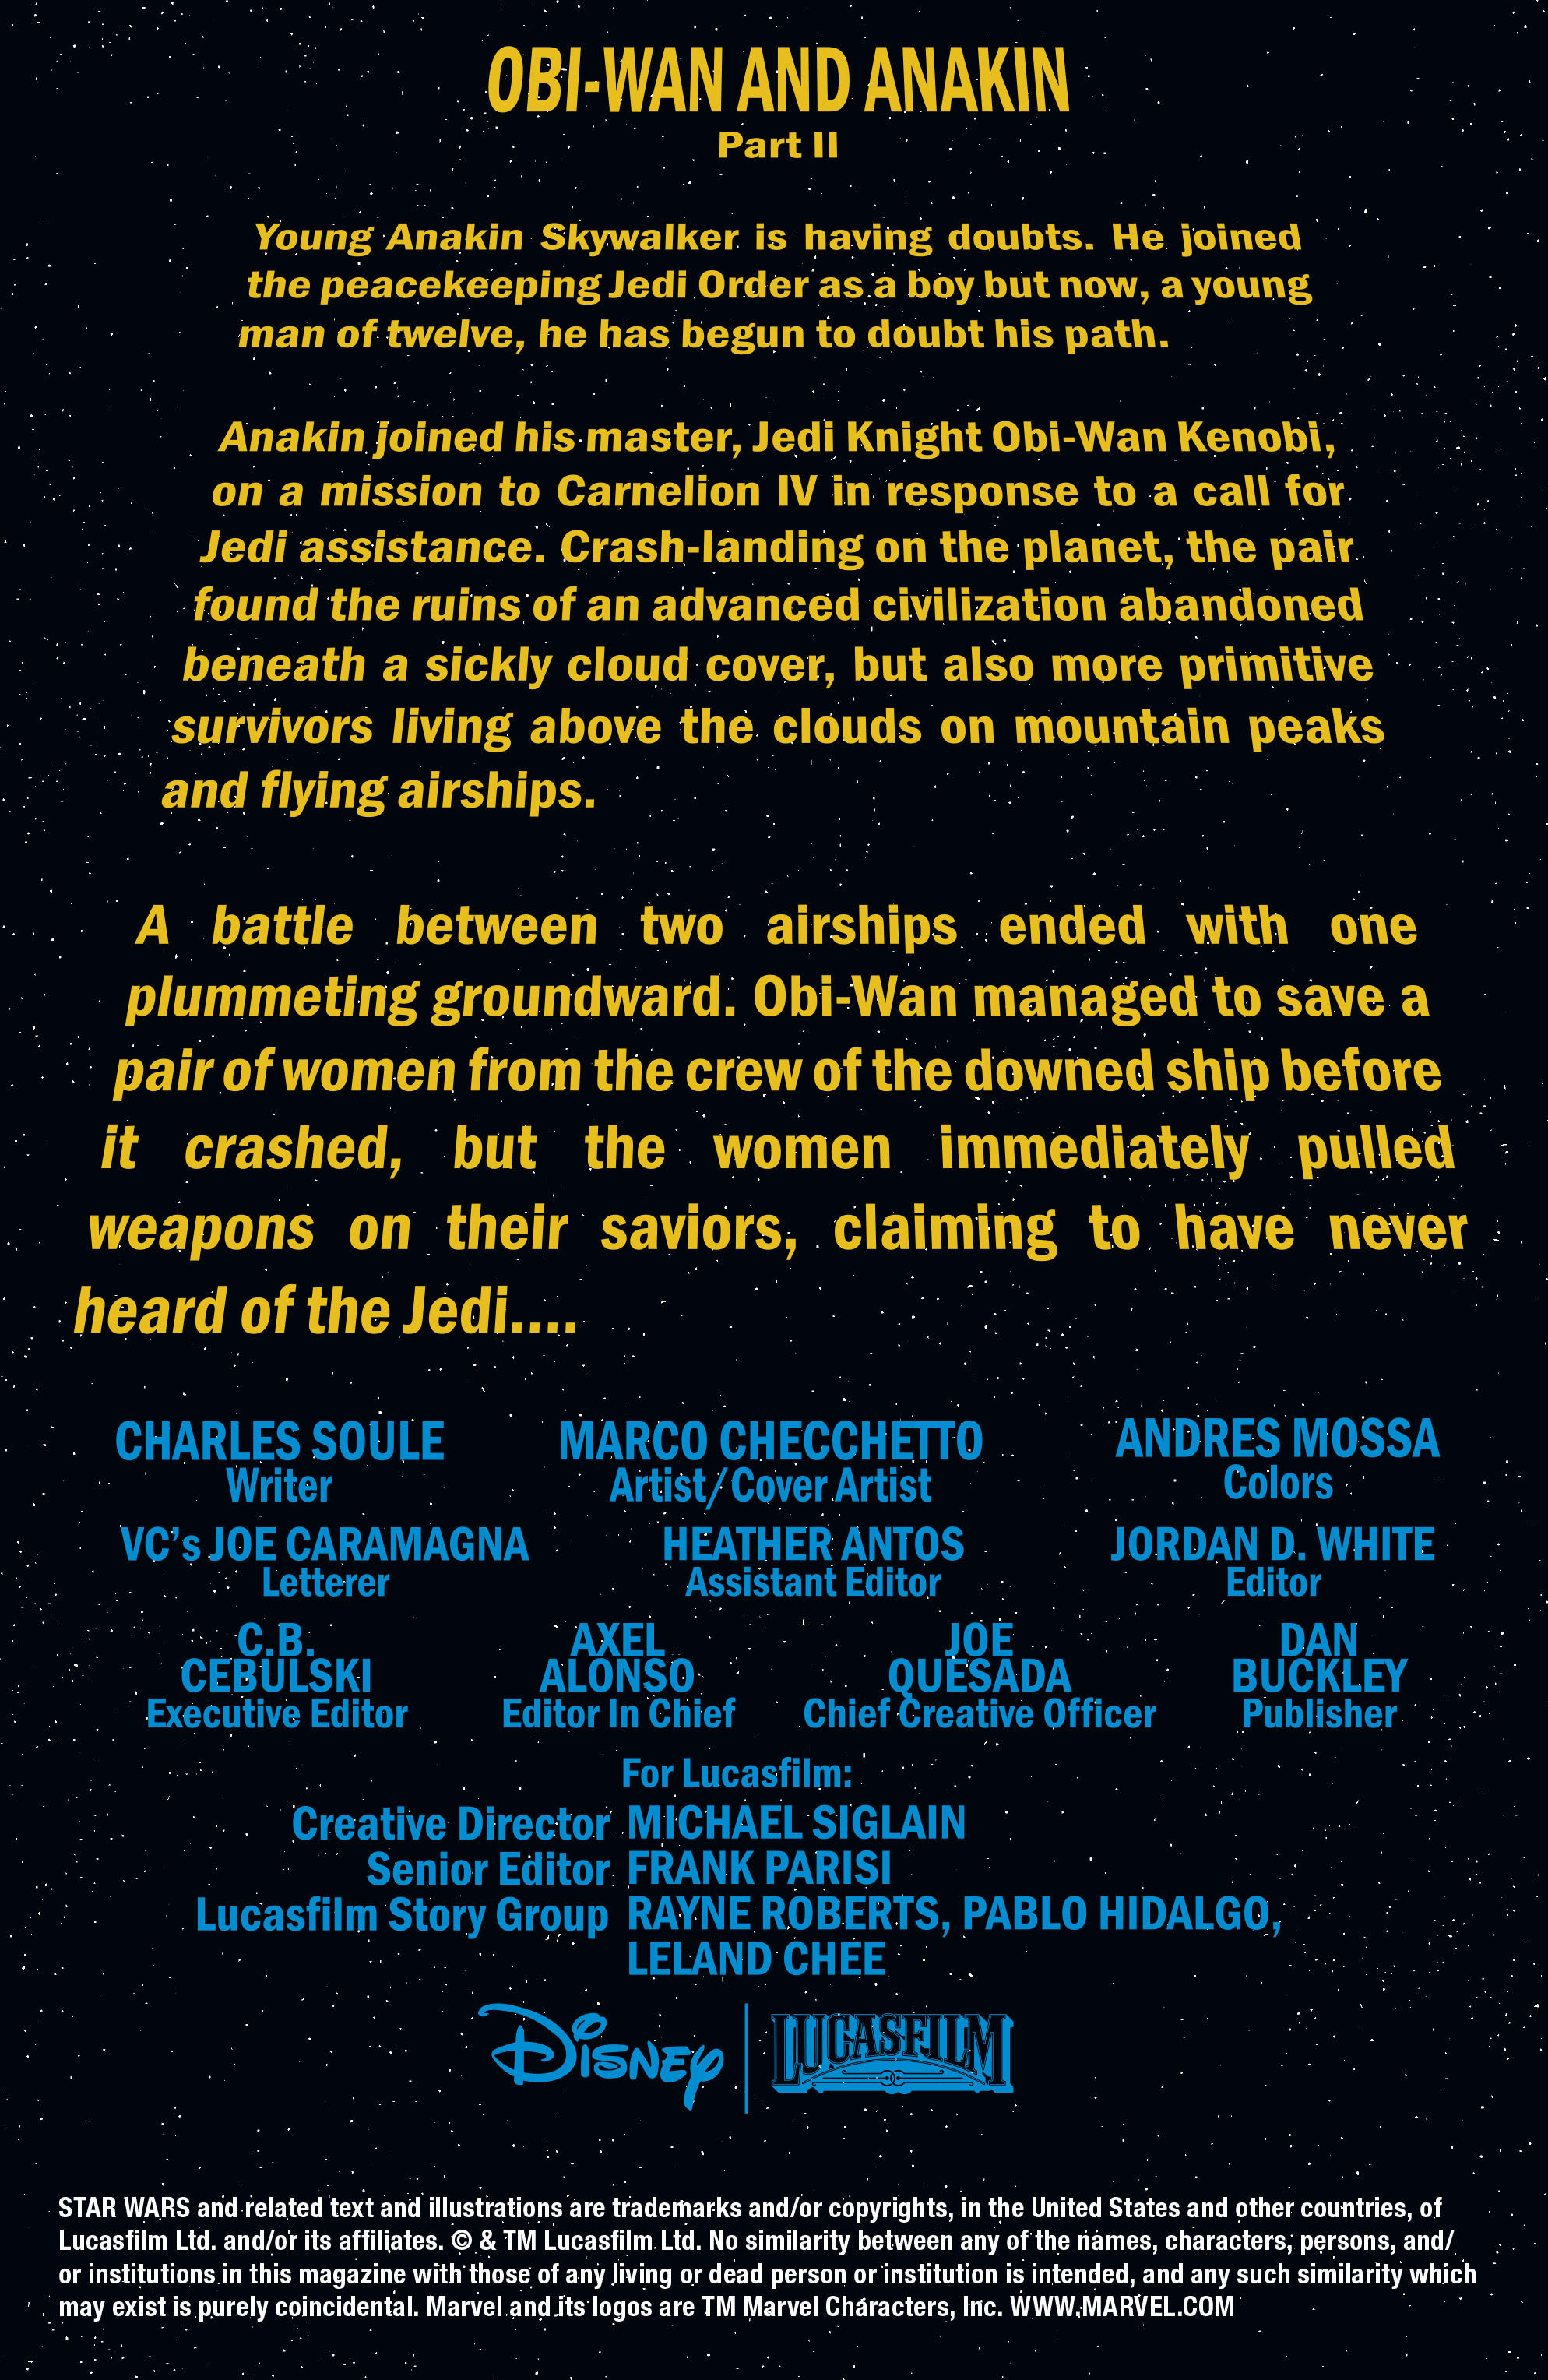 Read online Star Wars: Obi-Wan and Anakin comic -  Issue #2 - 2